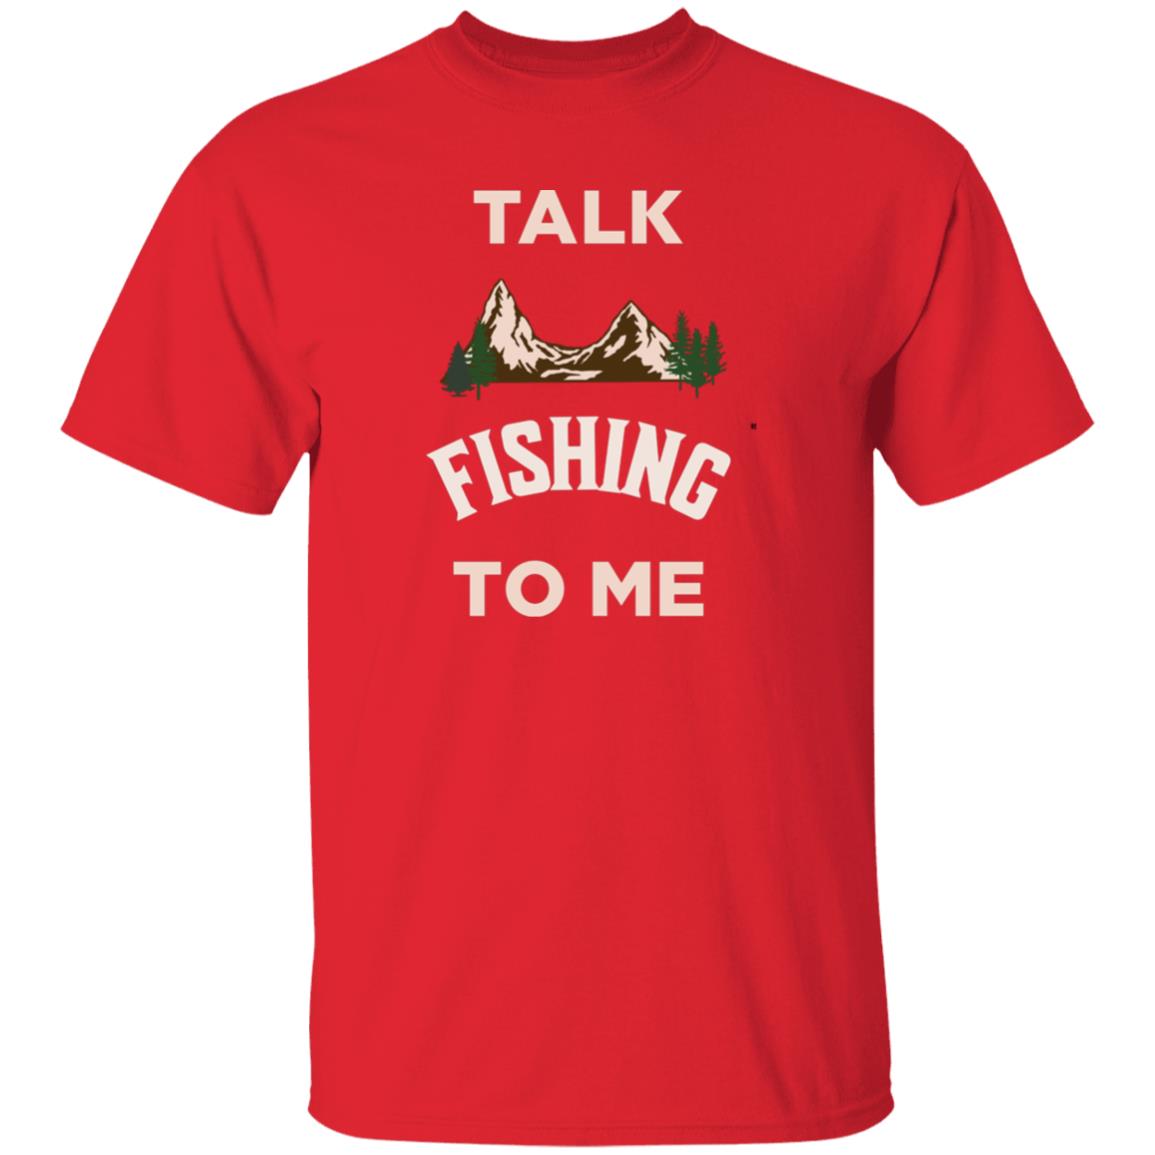 Talk fishing to me k t-shirt red